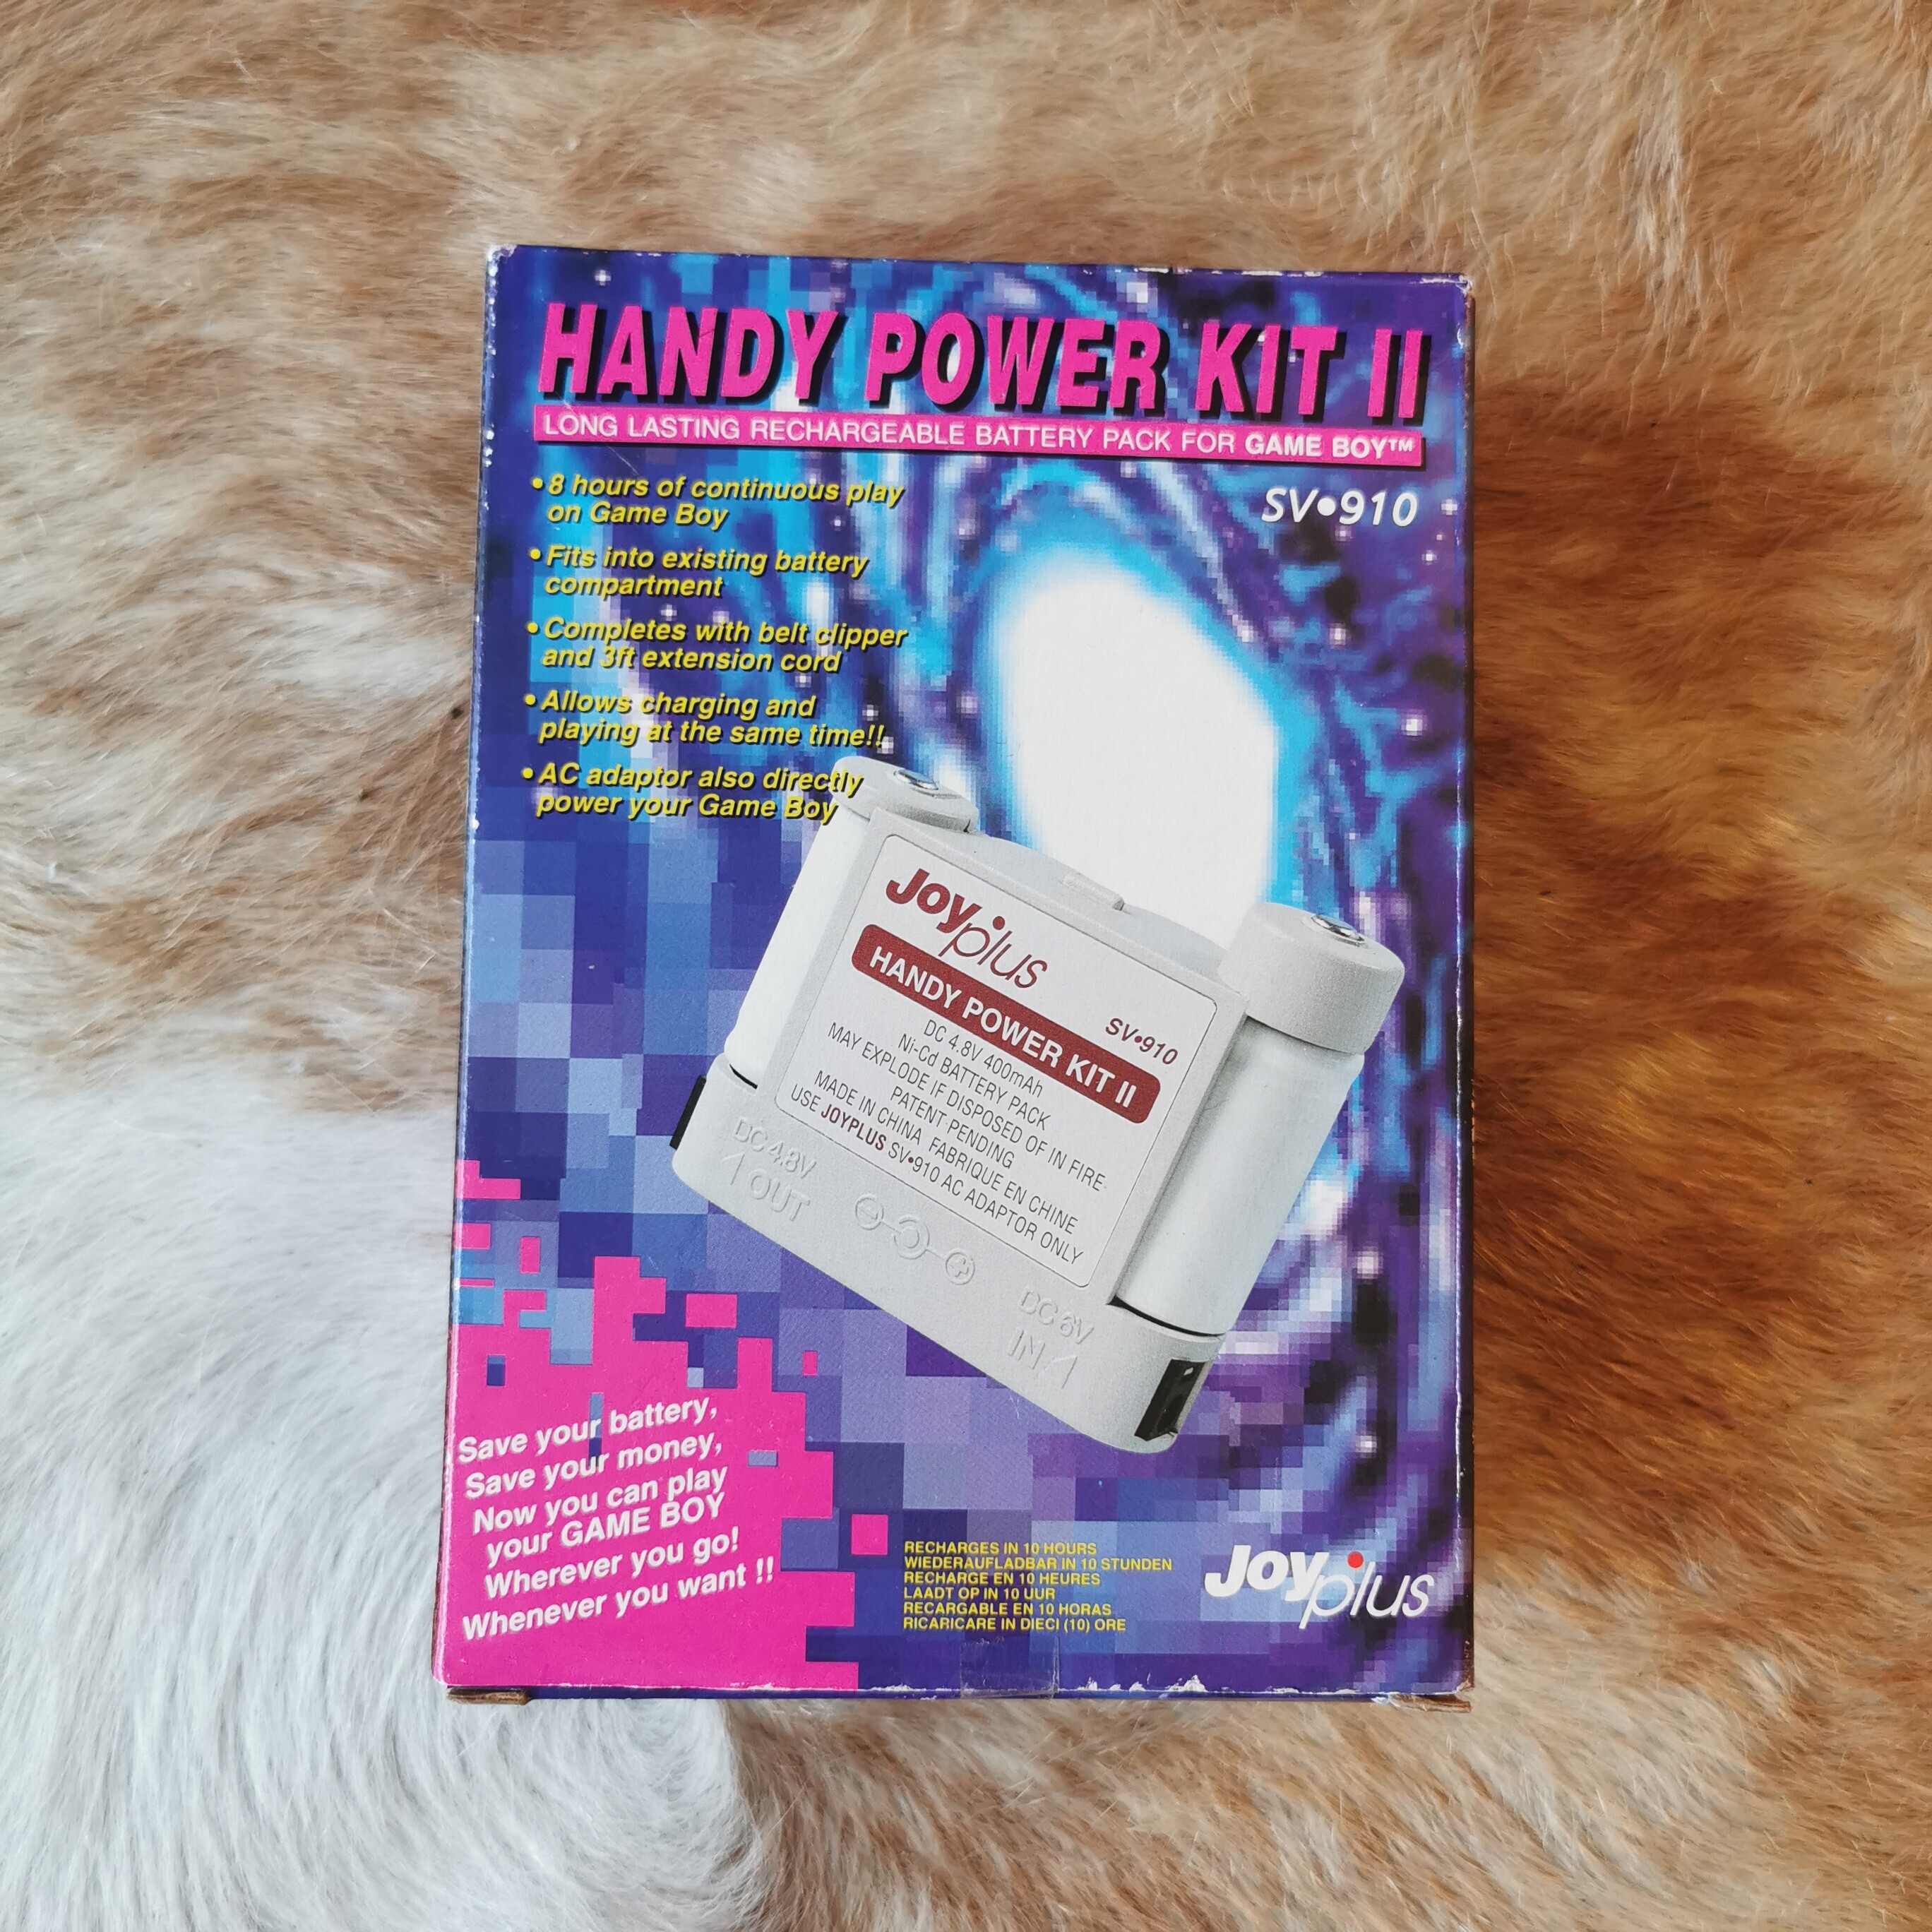  Joyplus Game Boy Hany Power II